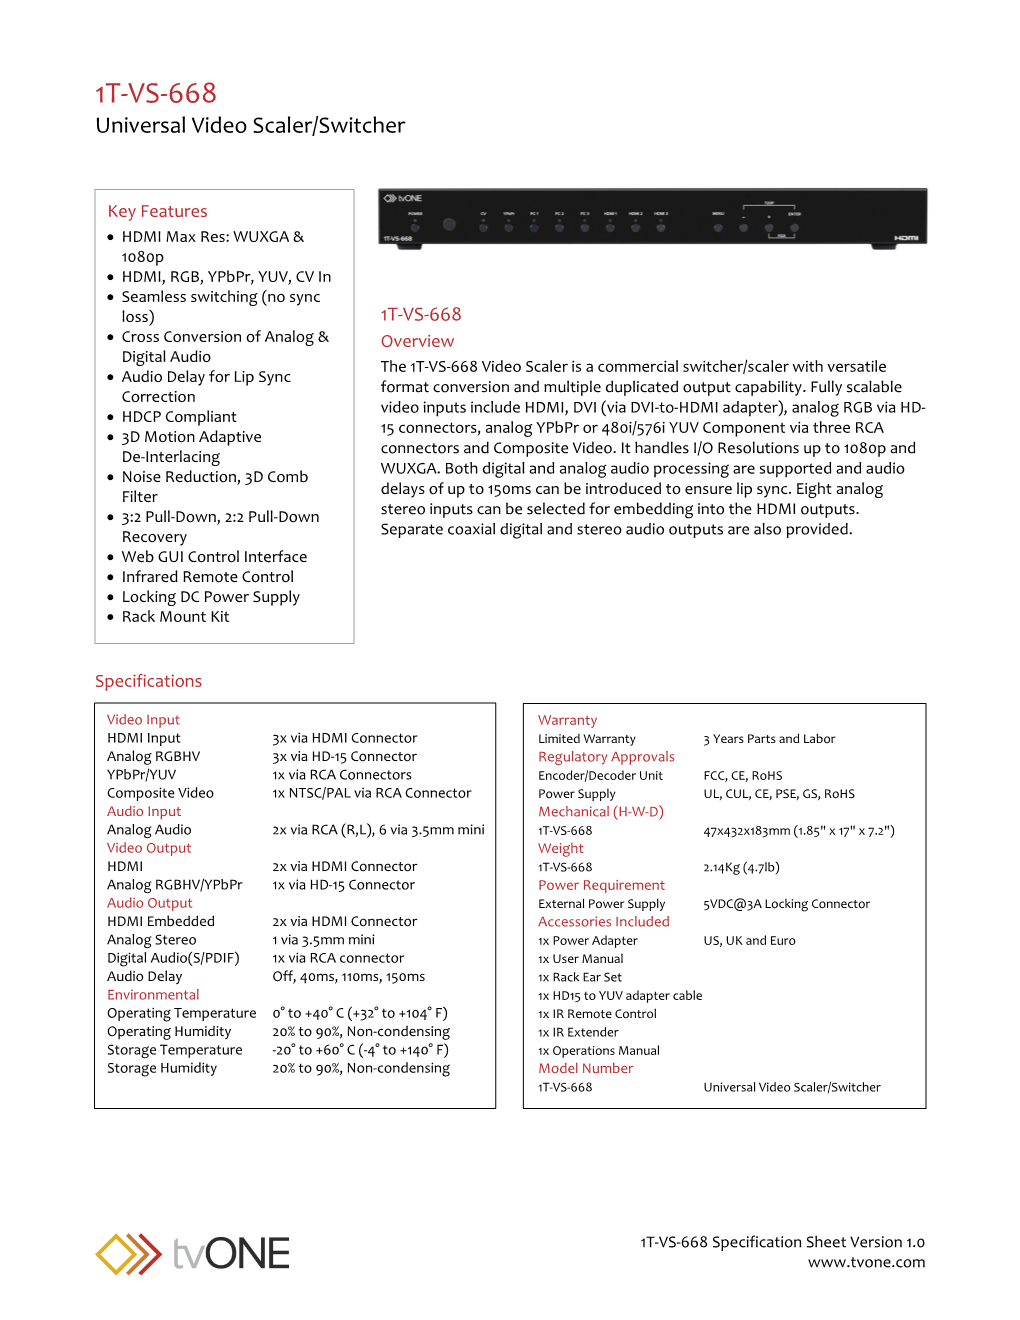 1T-VS-668 Universal Video Scaler/Switcher